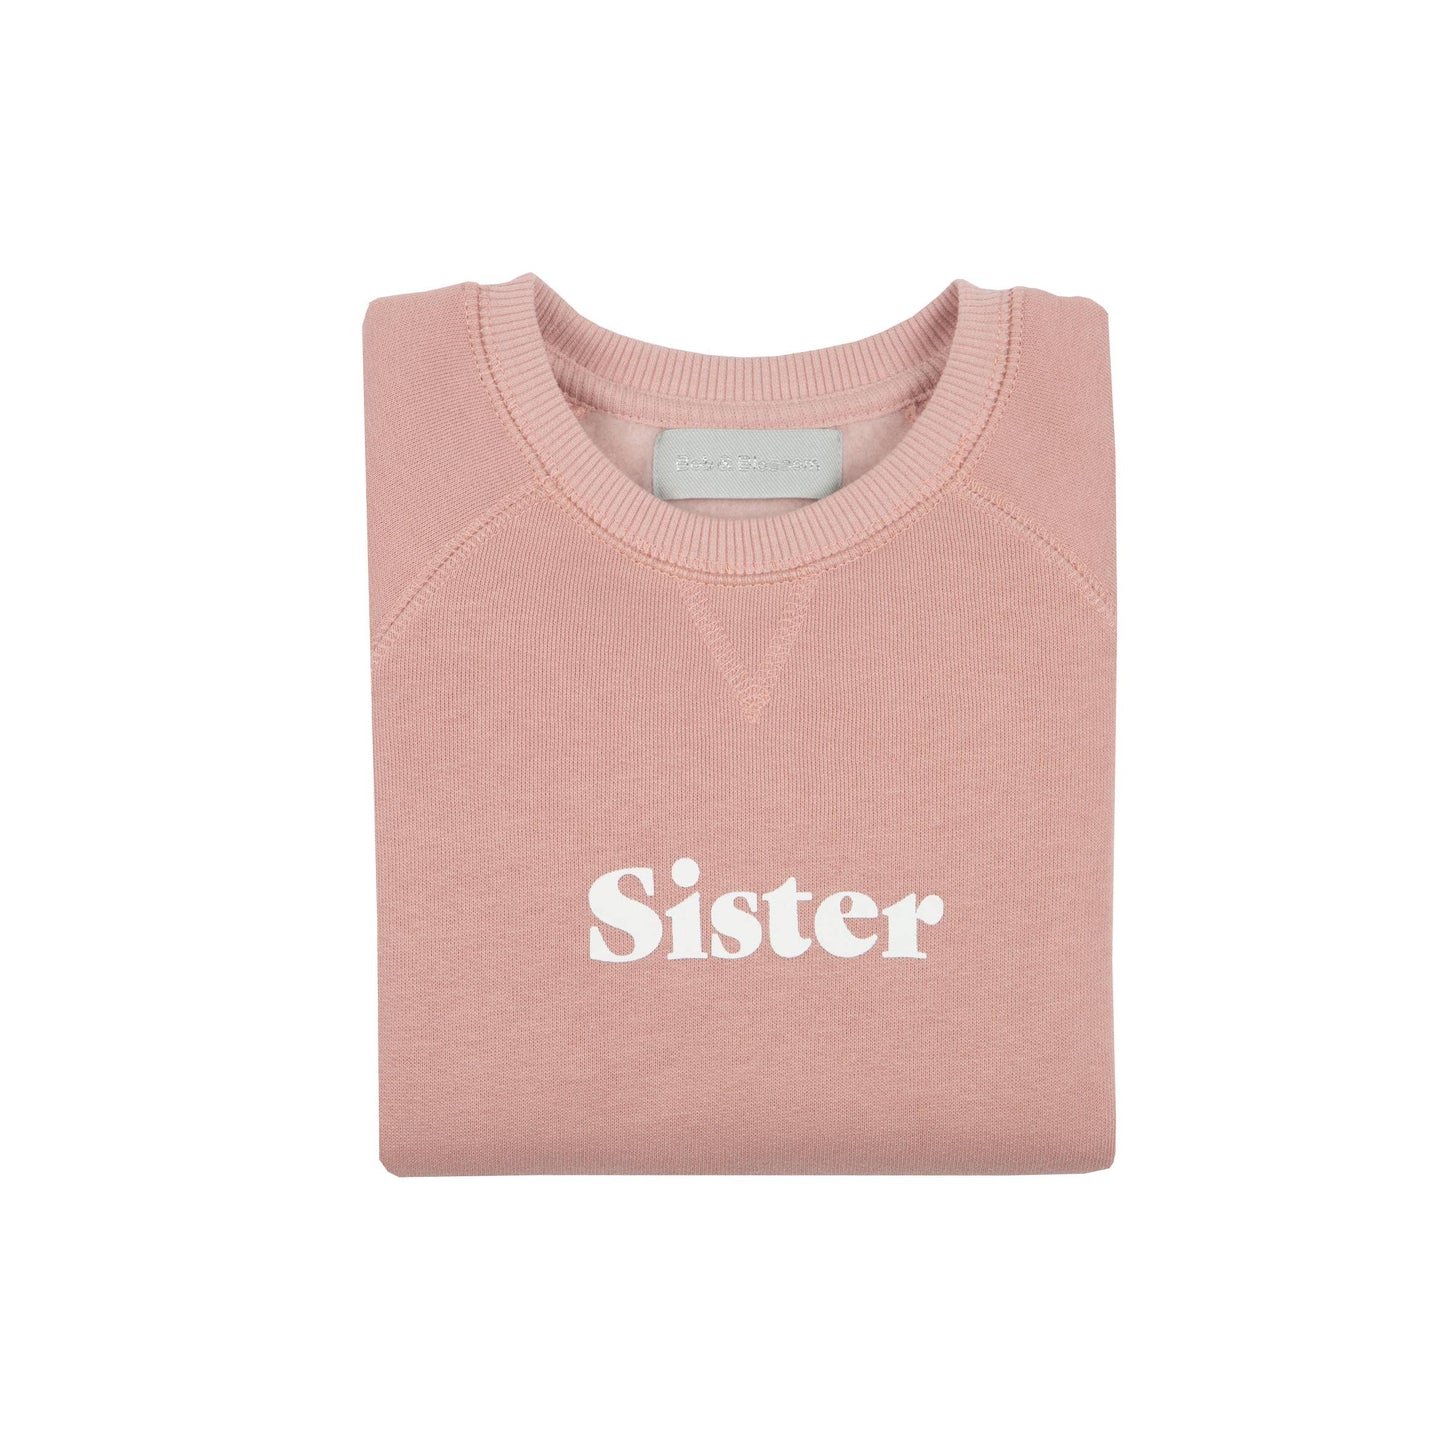 Bob & Blossom Ltd - Faded Blush 'SISTER' Sweatshirt